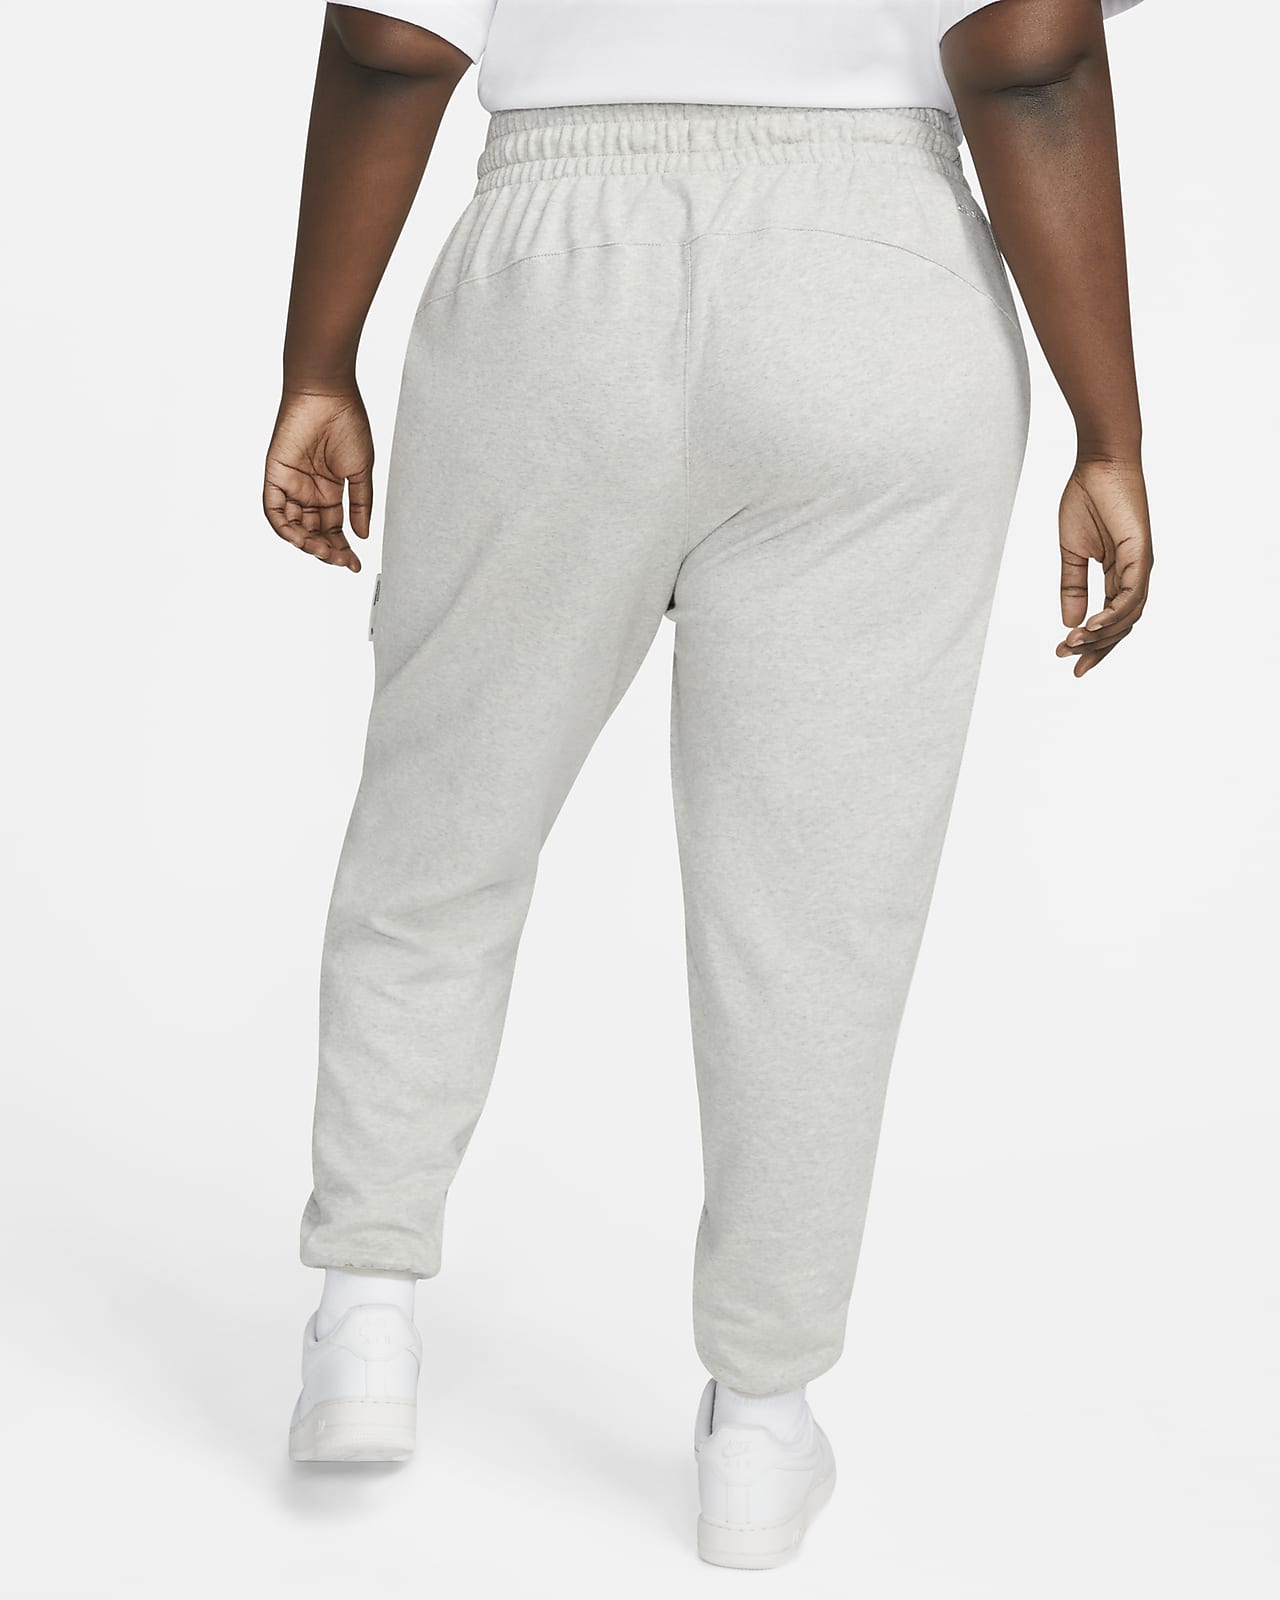 Entreprenør beskytte coping Nike Dri-FIT Swoosh Fly Standard Issue Women's Basketball Pants (Plus Size).  Nike.com